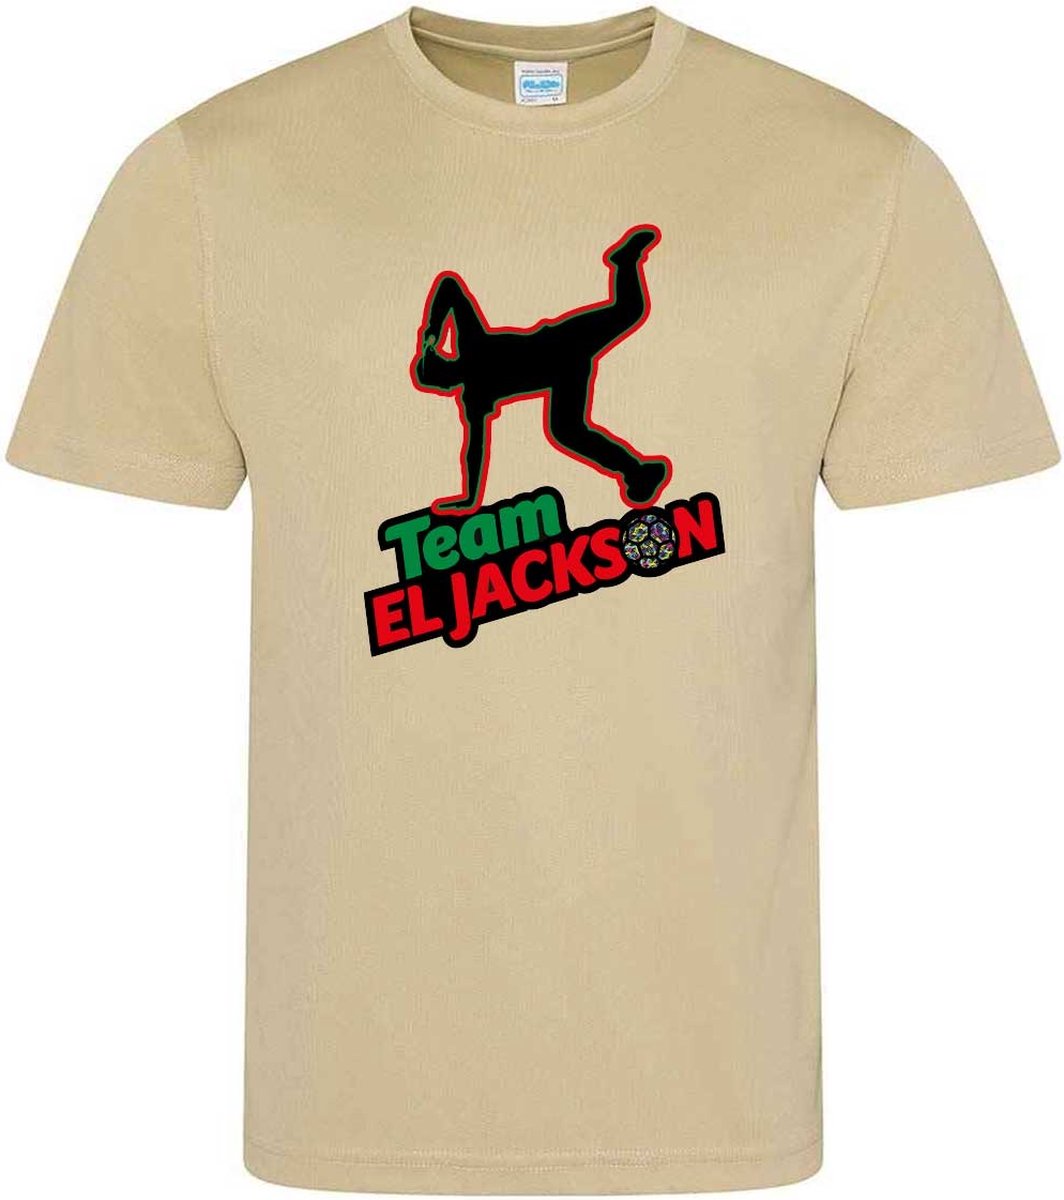 El Jackson T-Shirt - DESERT SAND - (164-XXL) - VOETBALTSHIRT - SPORTSHIRT